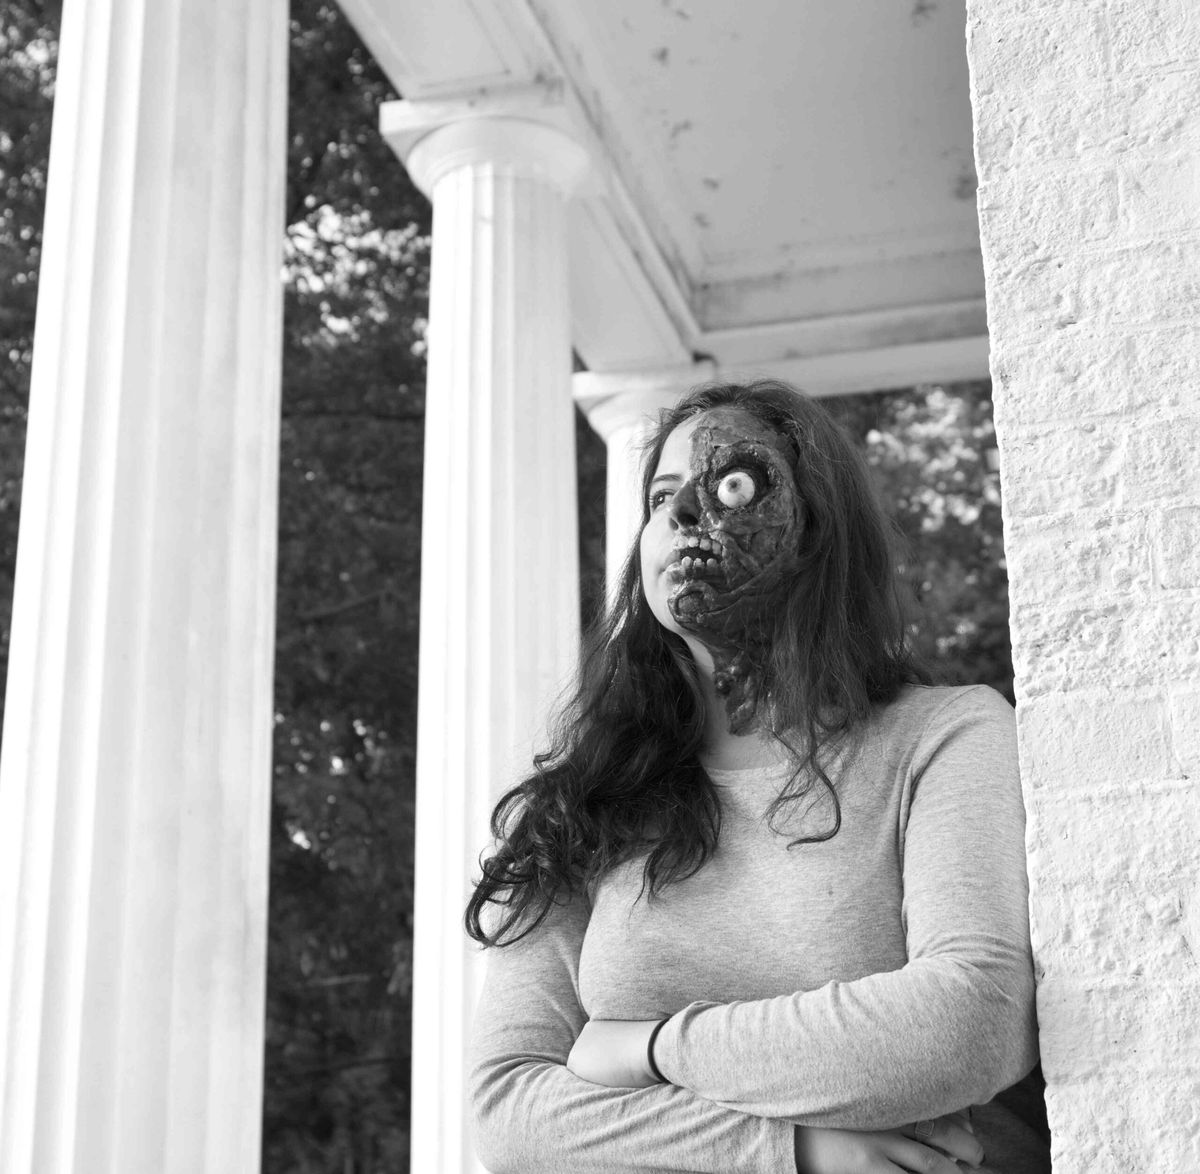 Marsh Haunted Haus Offered Genuine Fright on Halloween Night